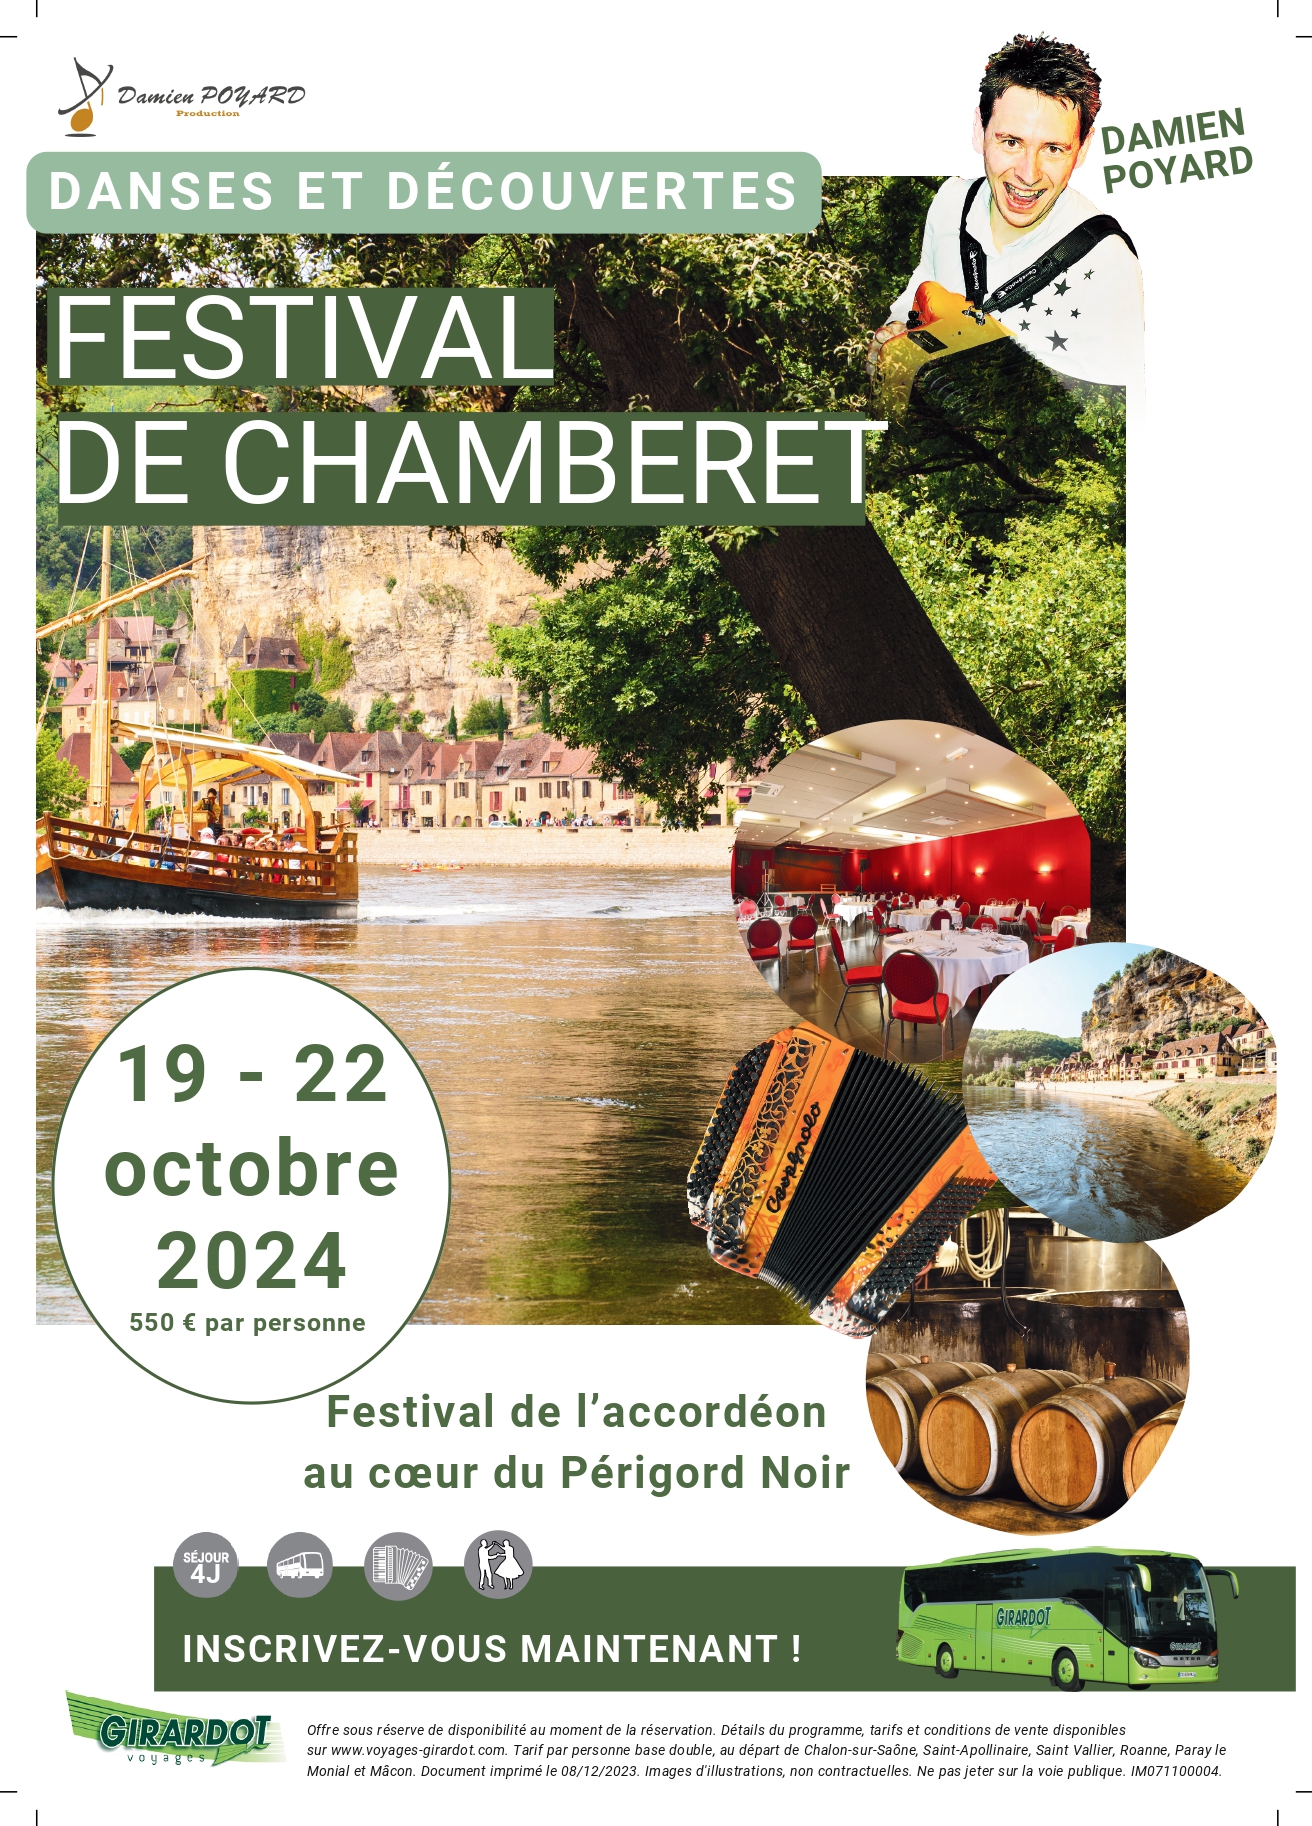 festival_Chamberet_-_damien_poyard-1_page-0001.jpg